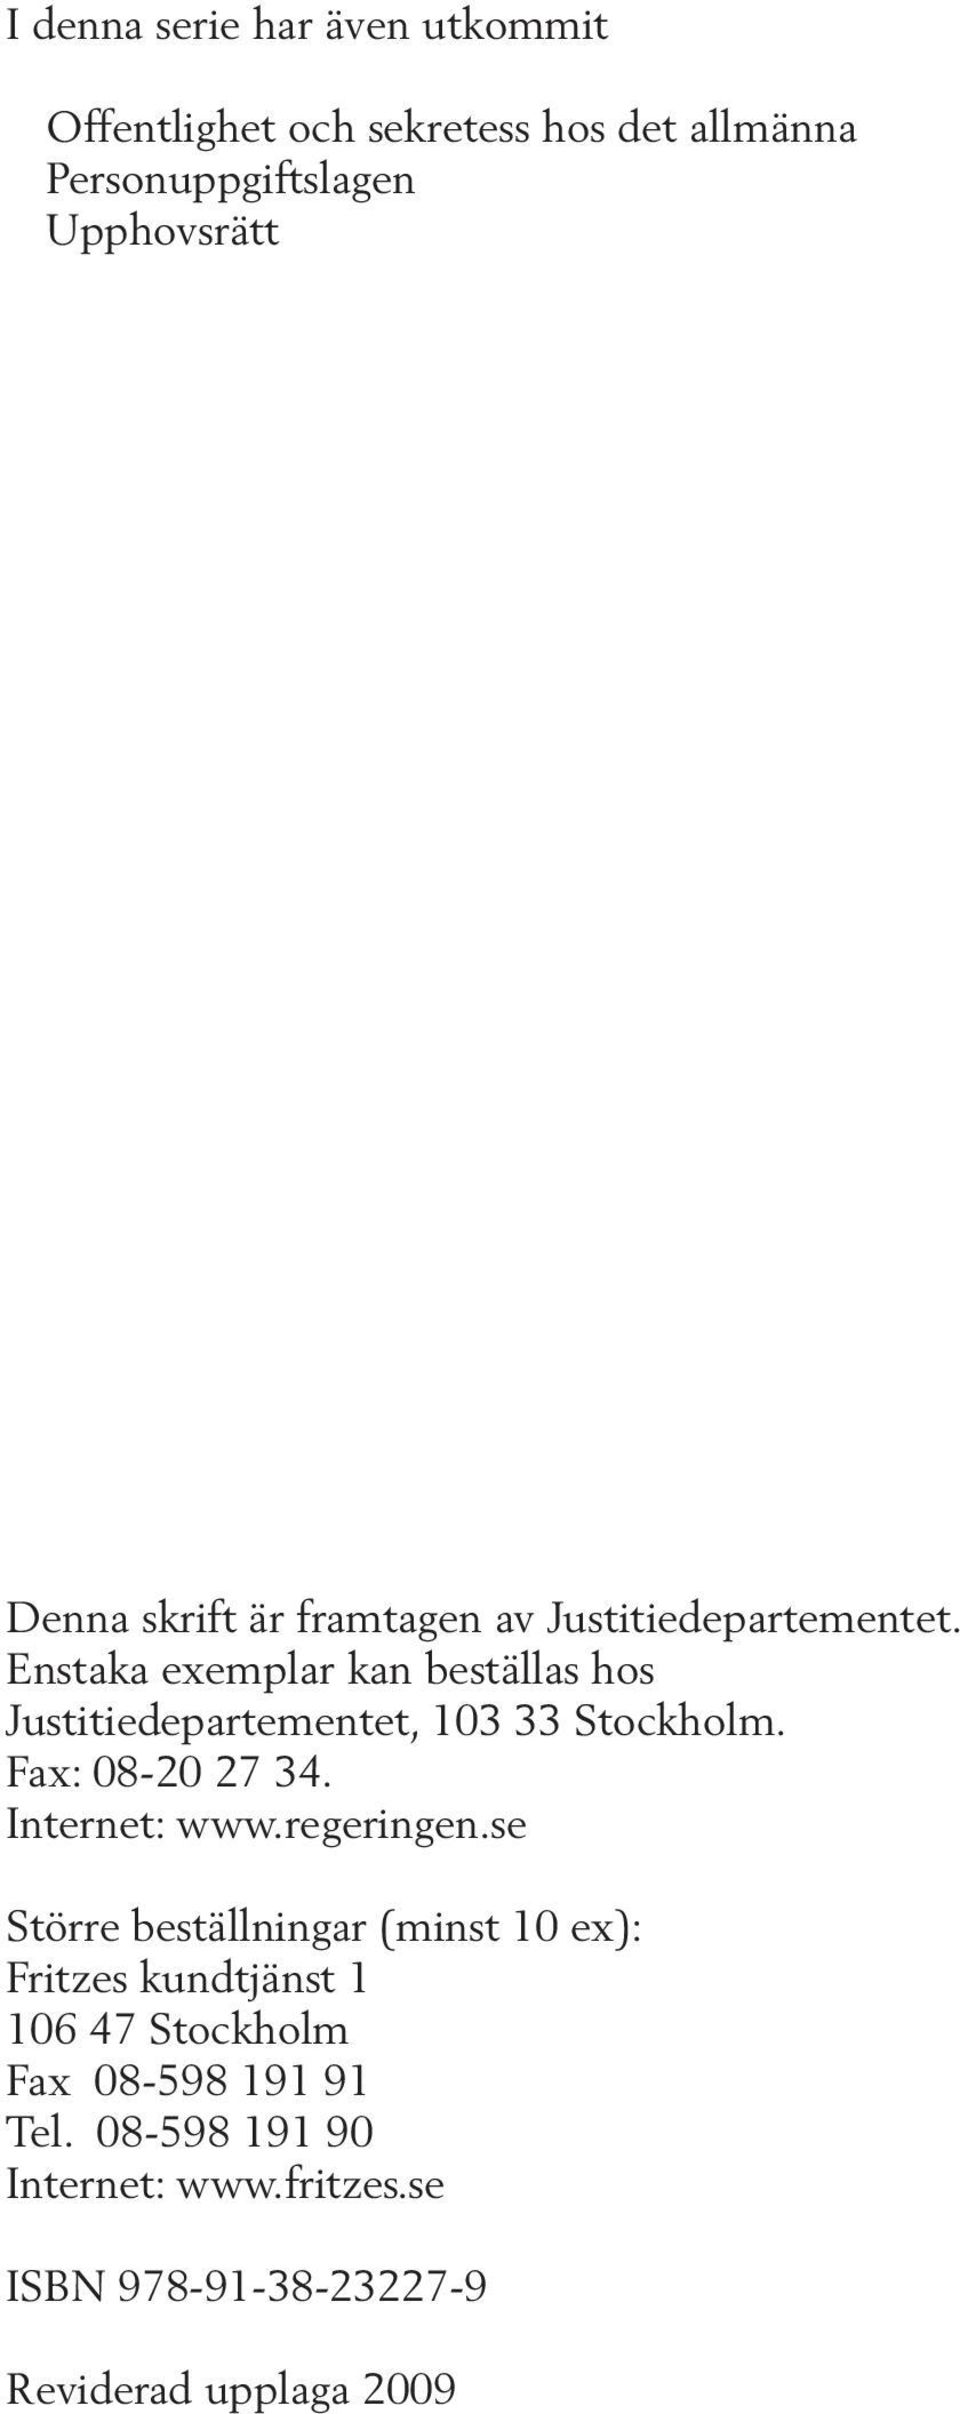 Enstaka exemplar kan beställas hos Justitiedepartementet, 103 33 Stockholm. Fax: 08-20 27 34. Internet: www.